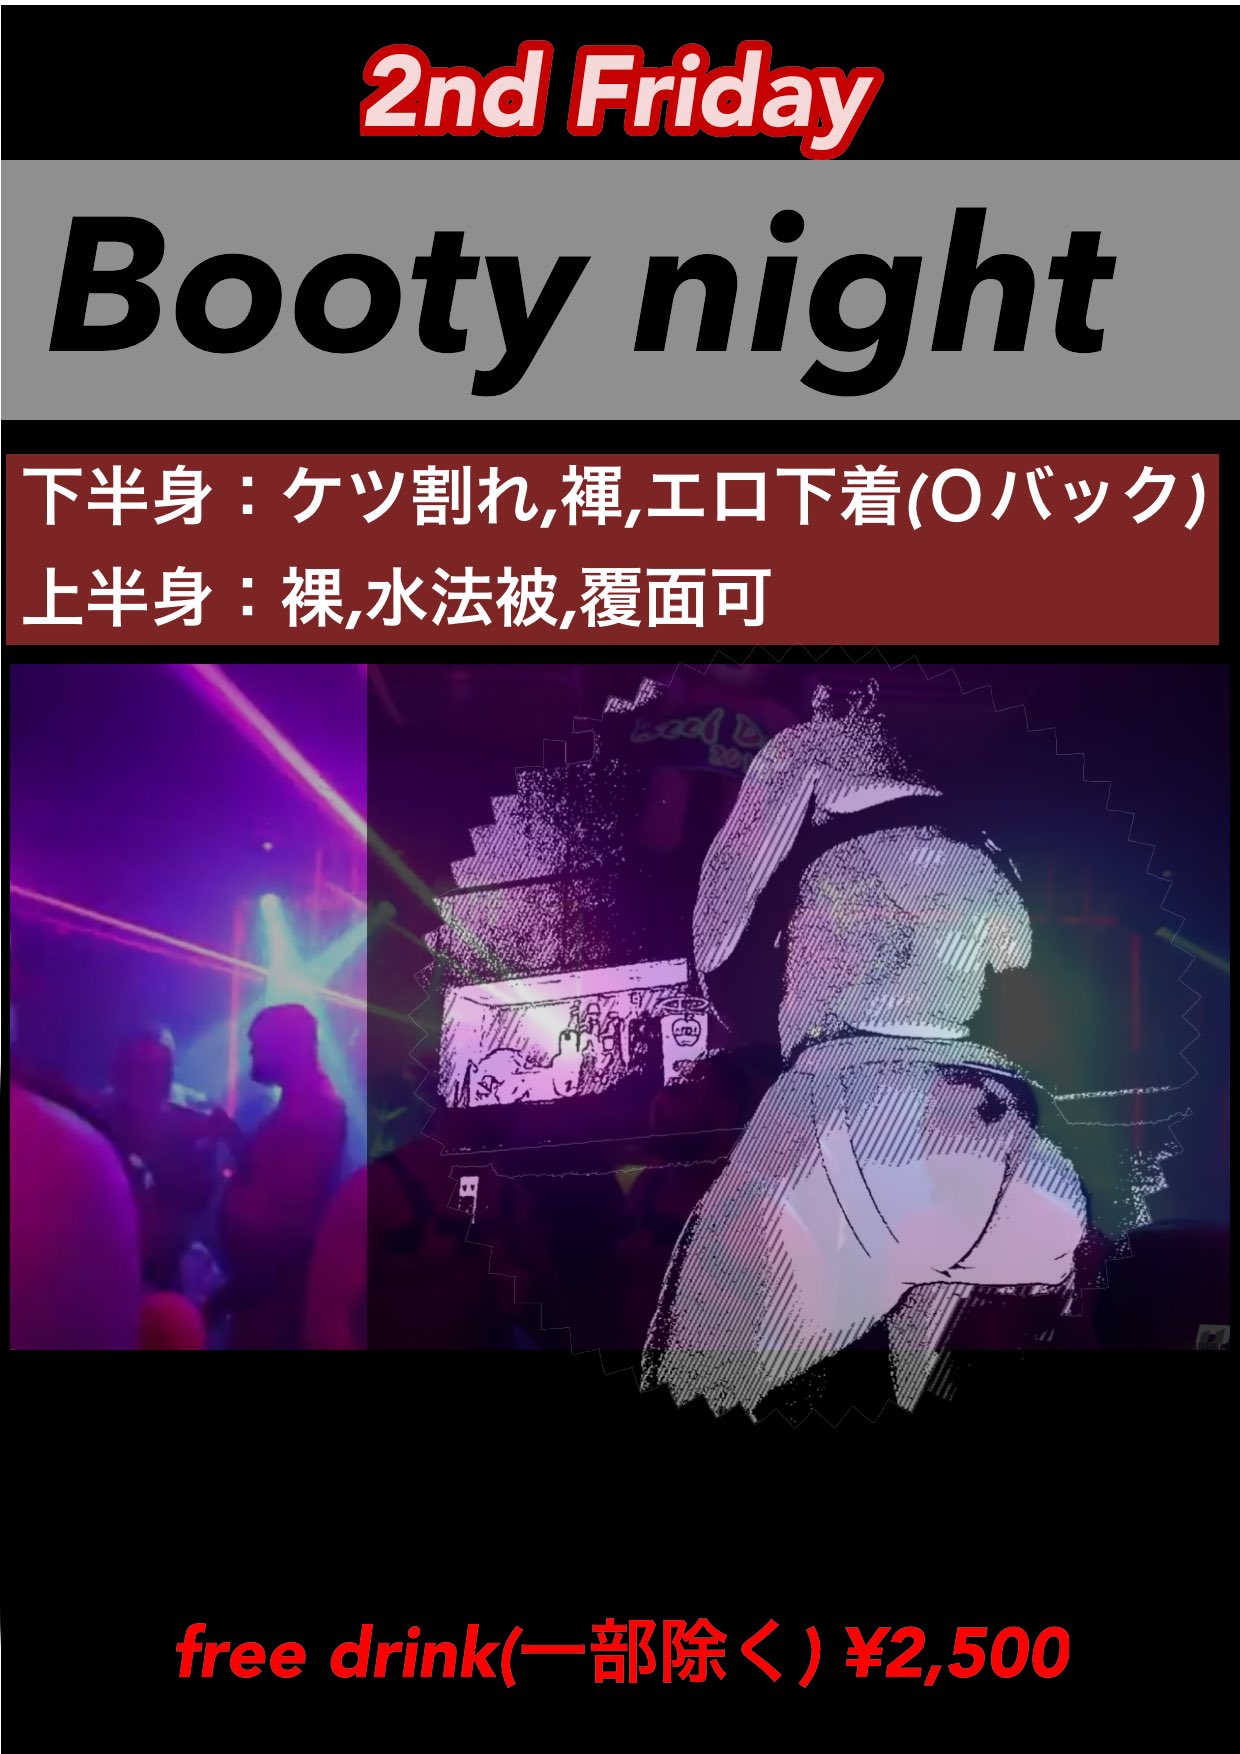 Booty night